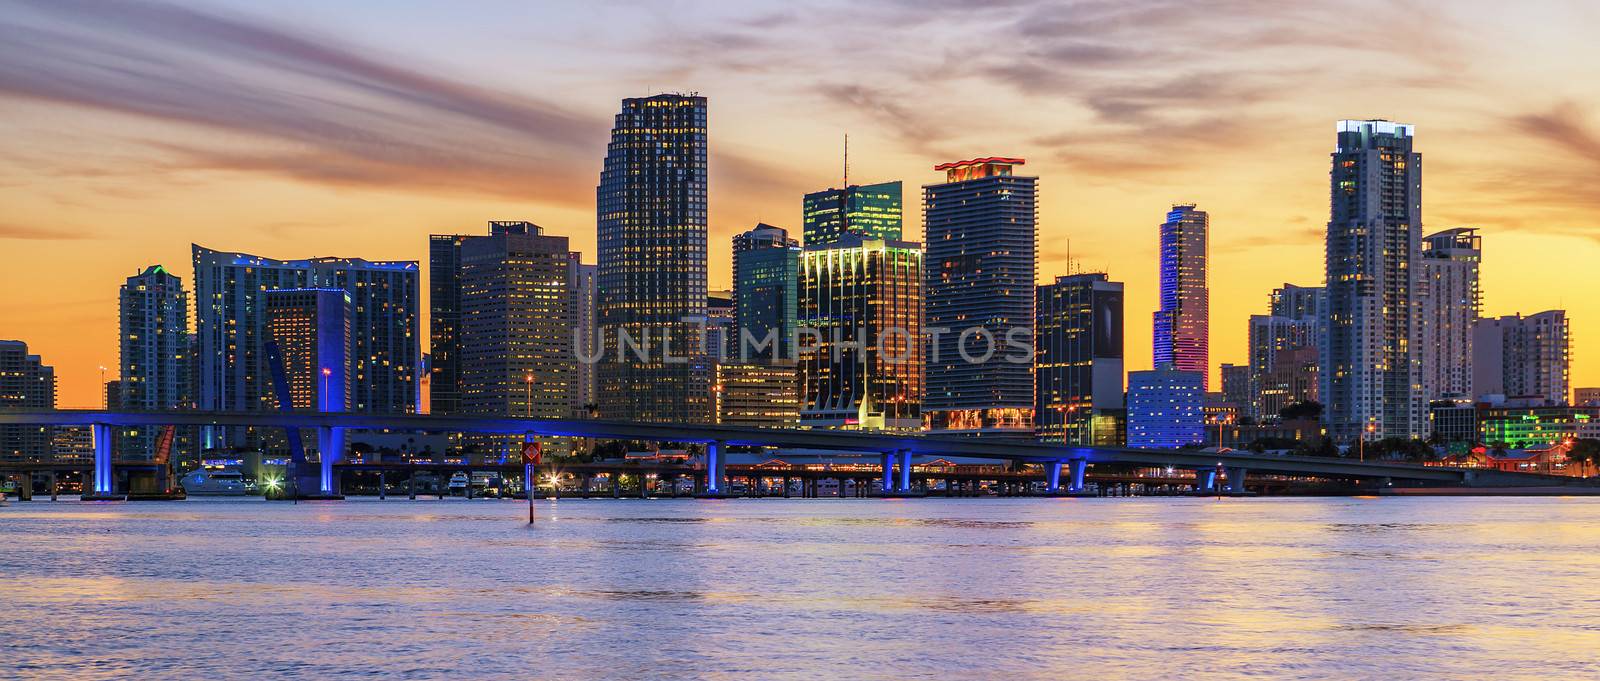 Panoramic sunset, Miami by vwalakte